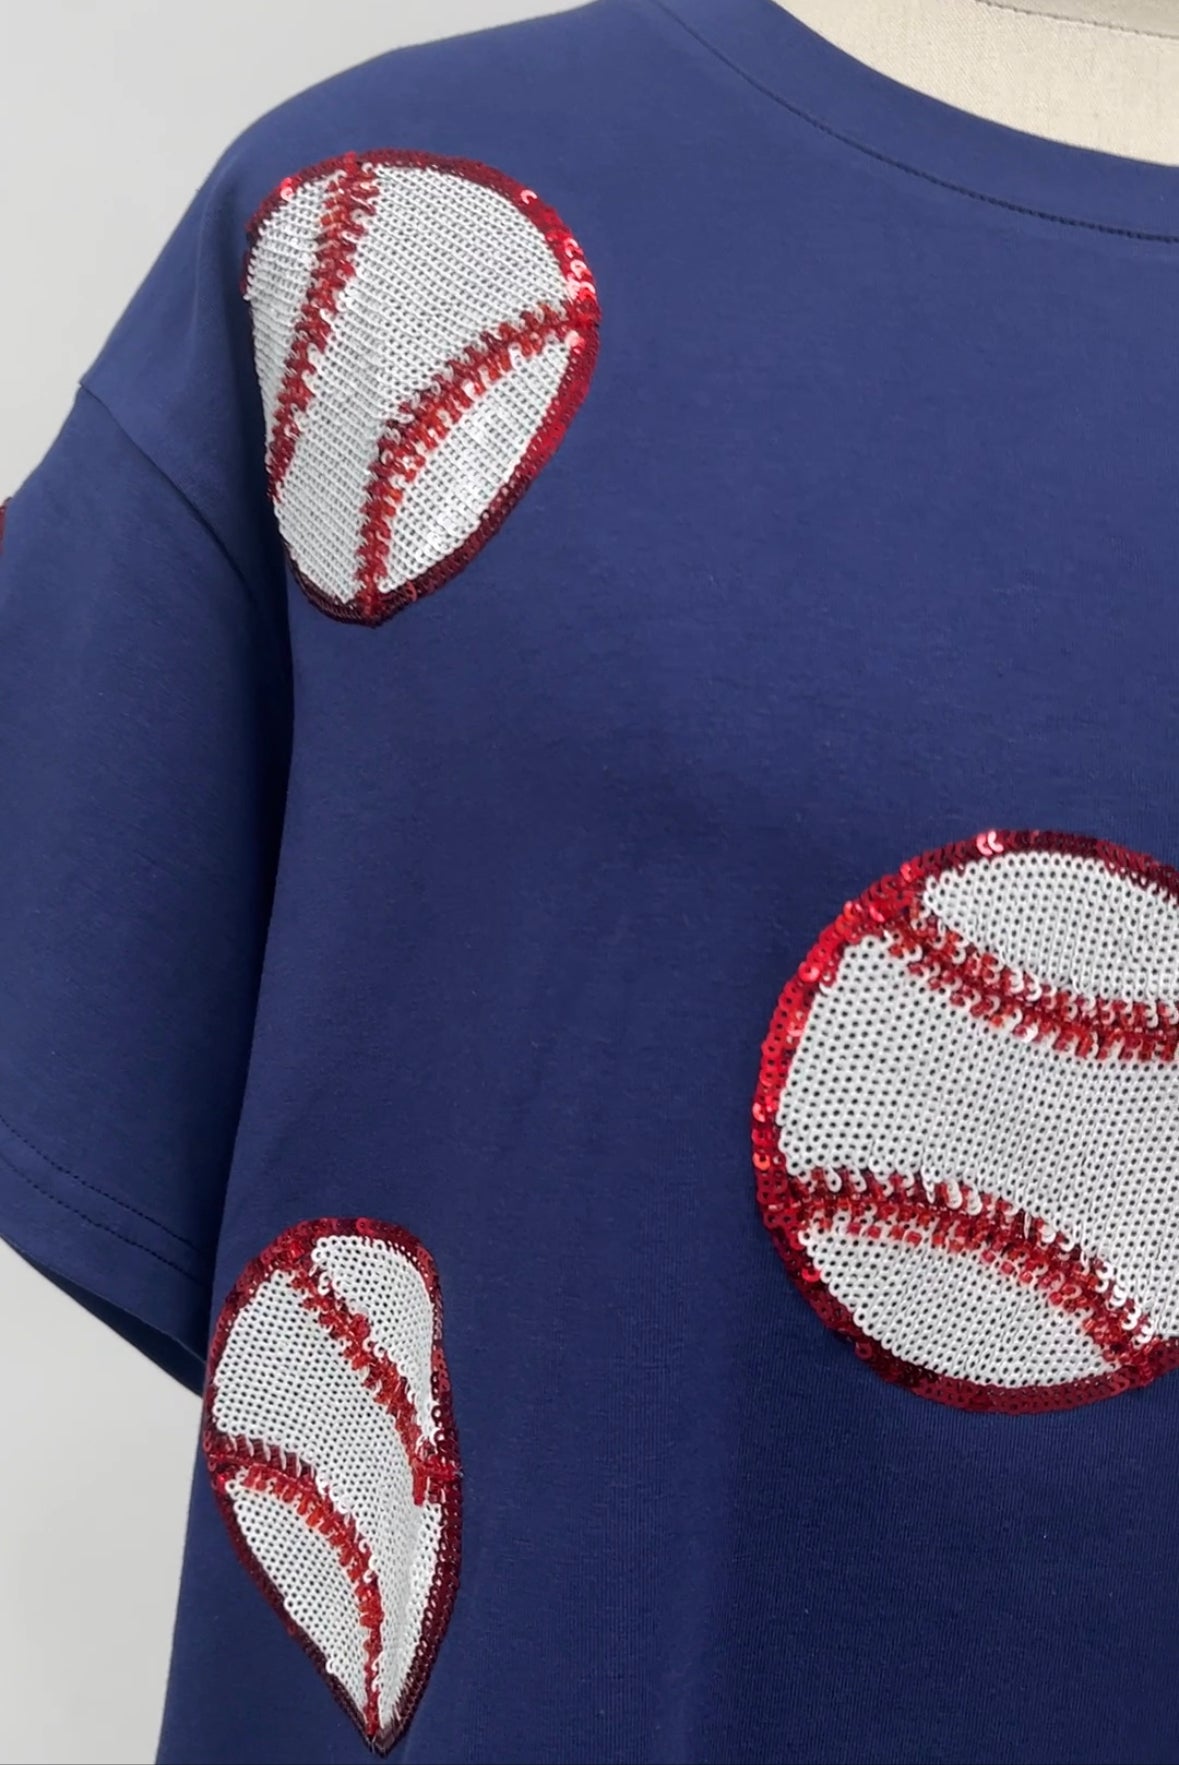 Baseball Beadtubes Sequins Navy Tshirt